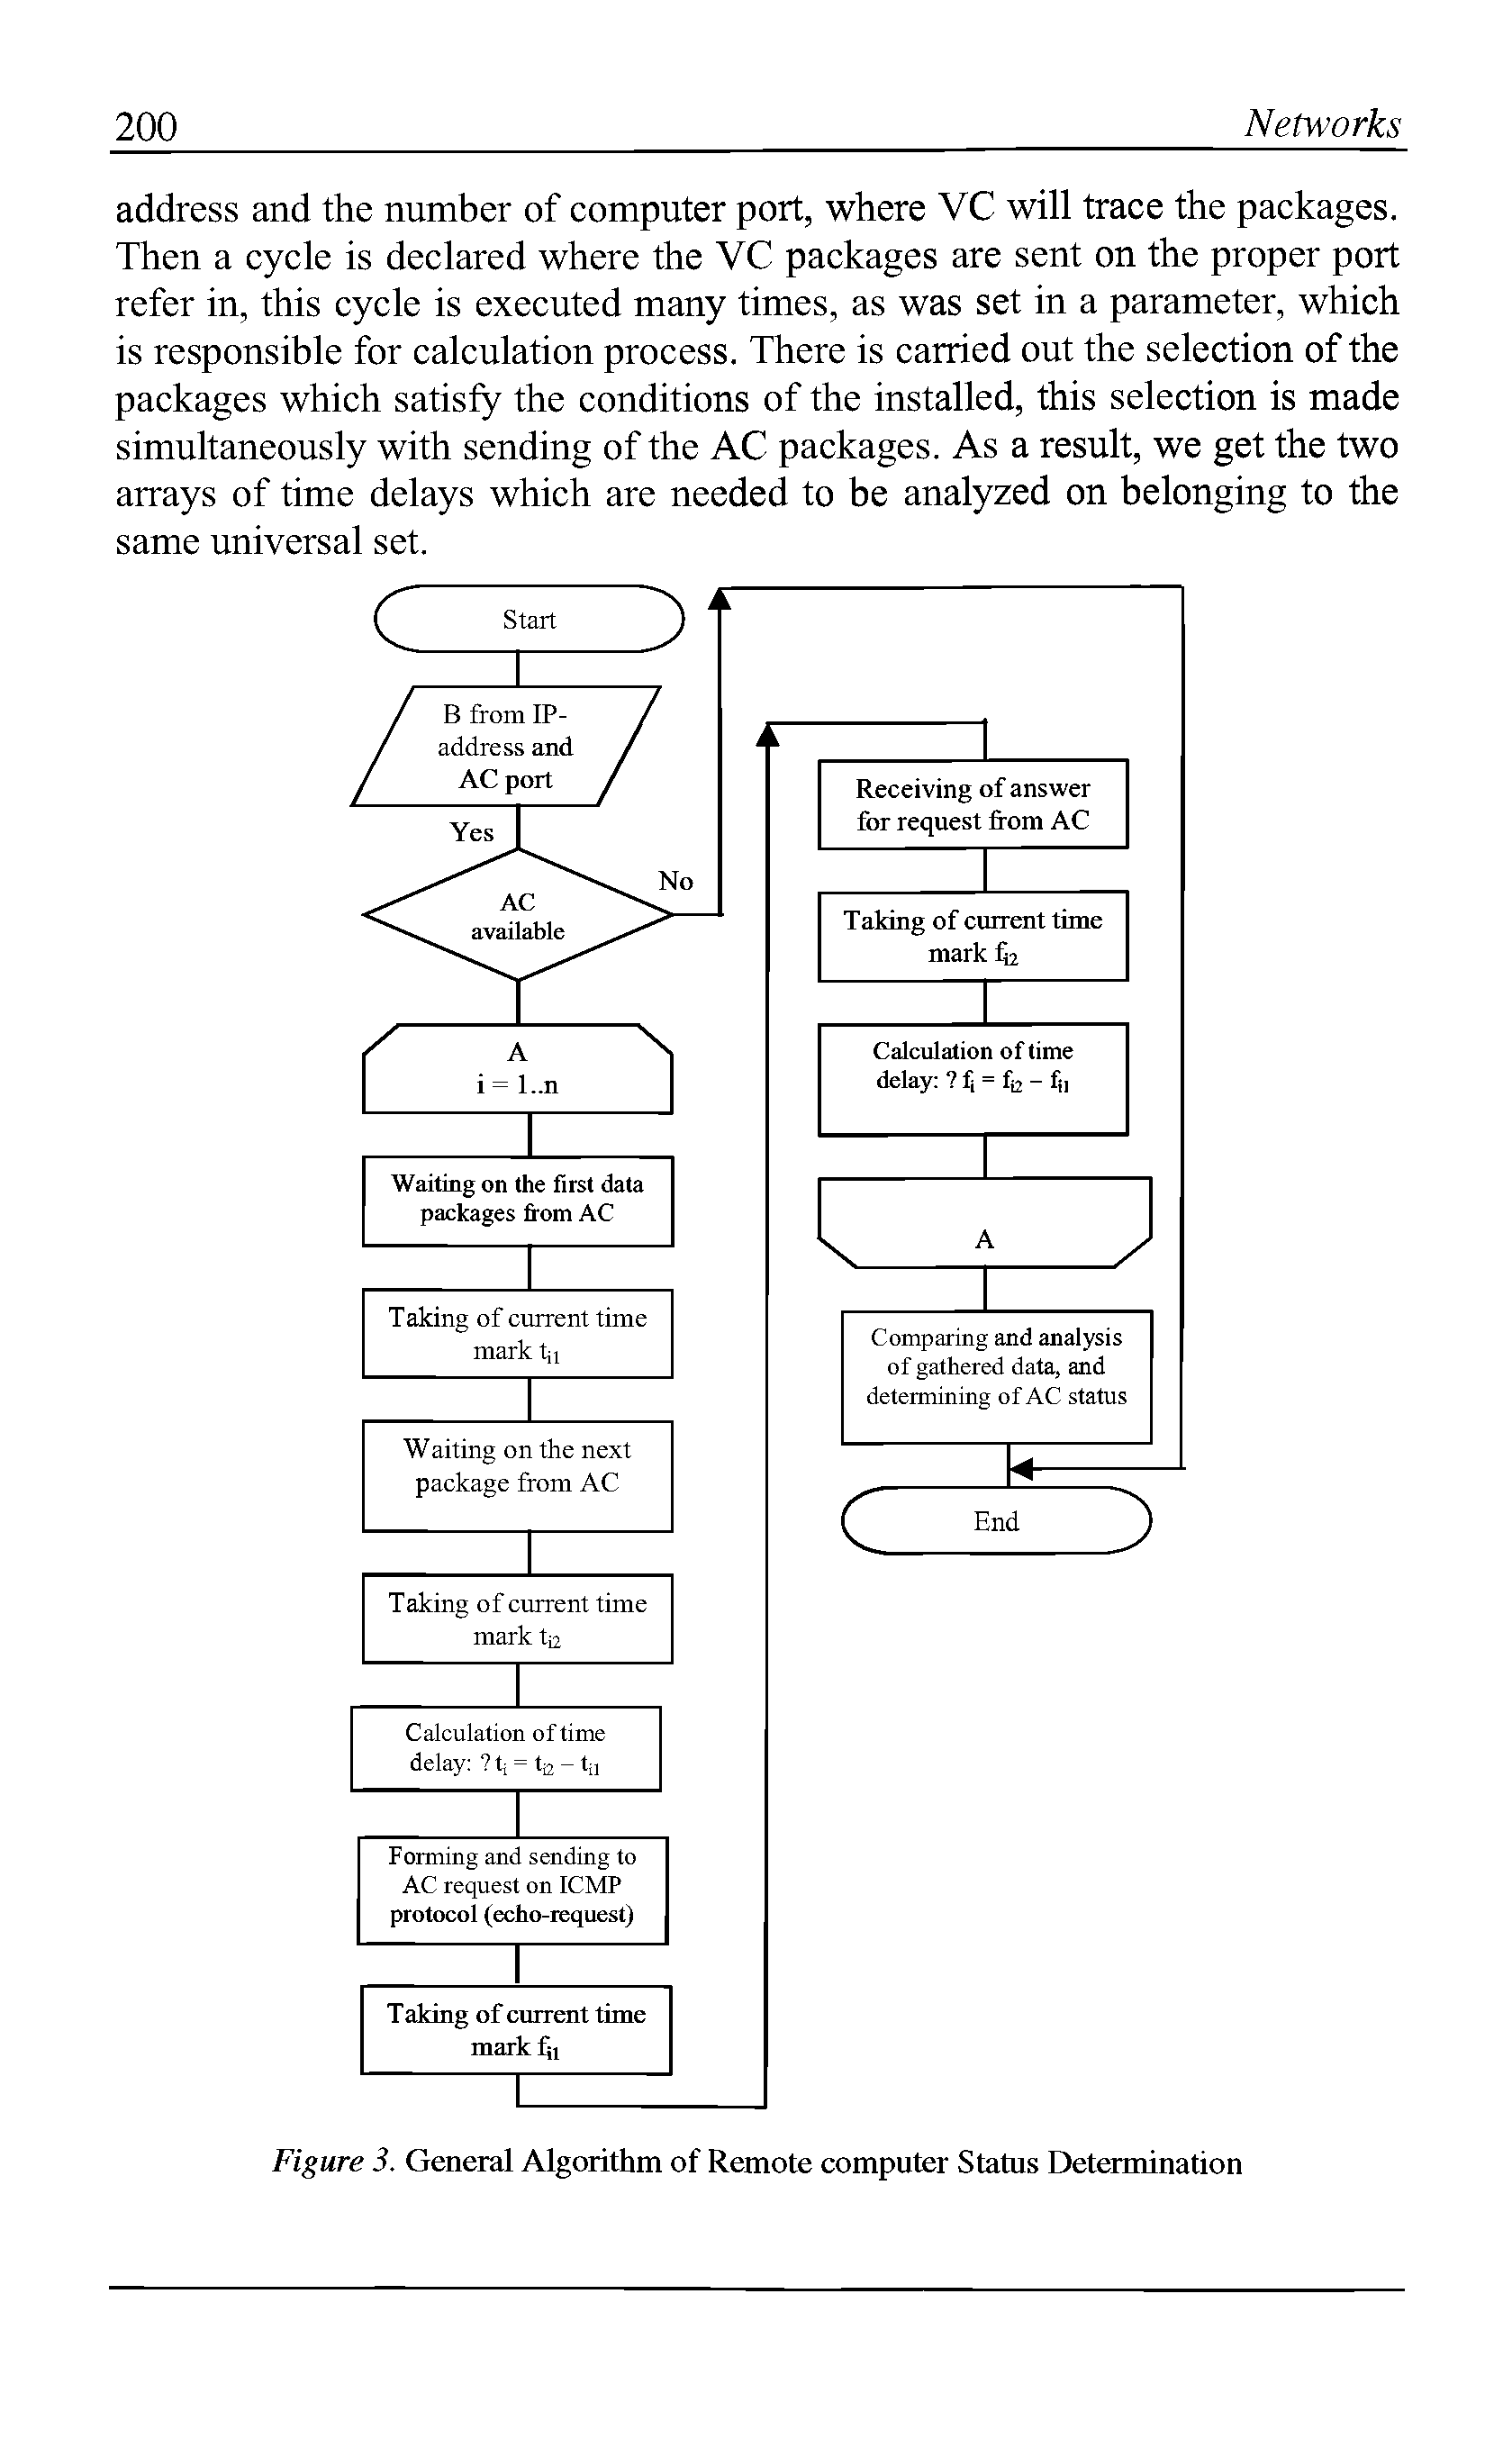 Figure 3. General Algorithm of Remote computer Status Determination...